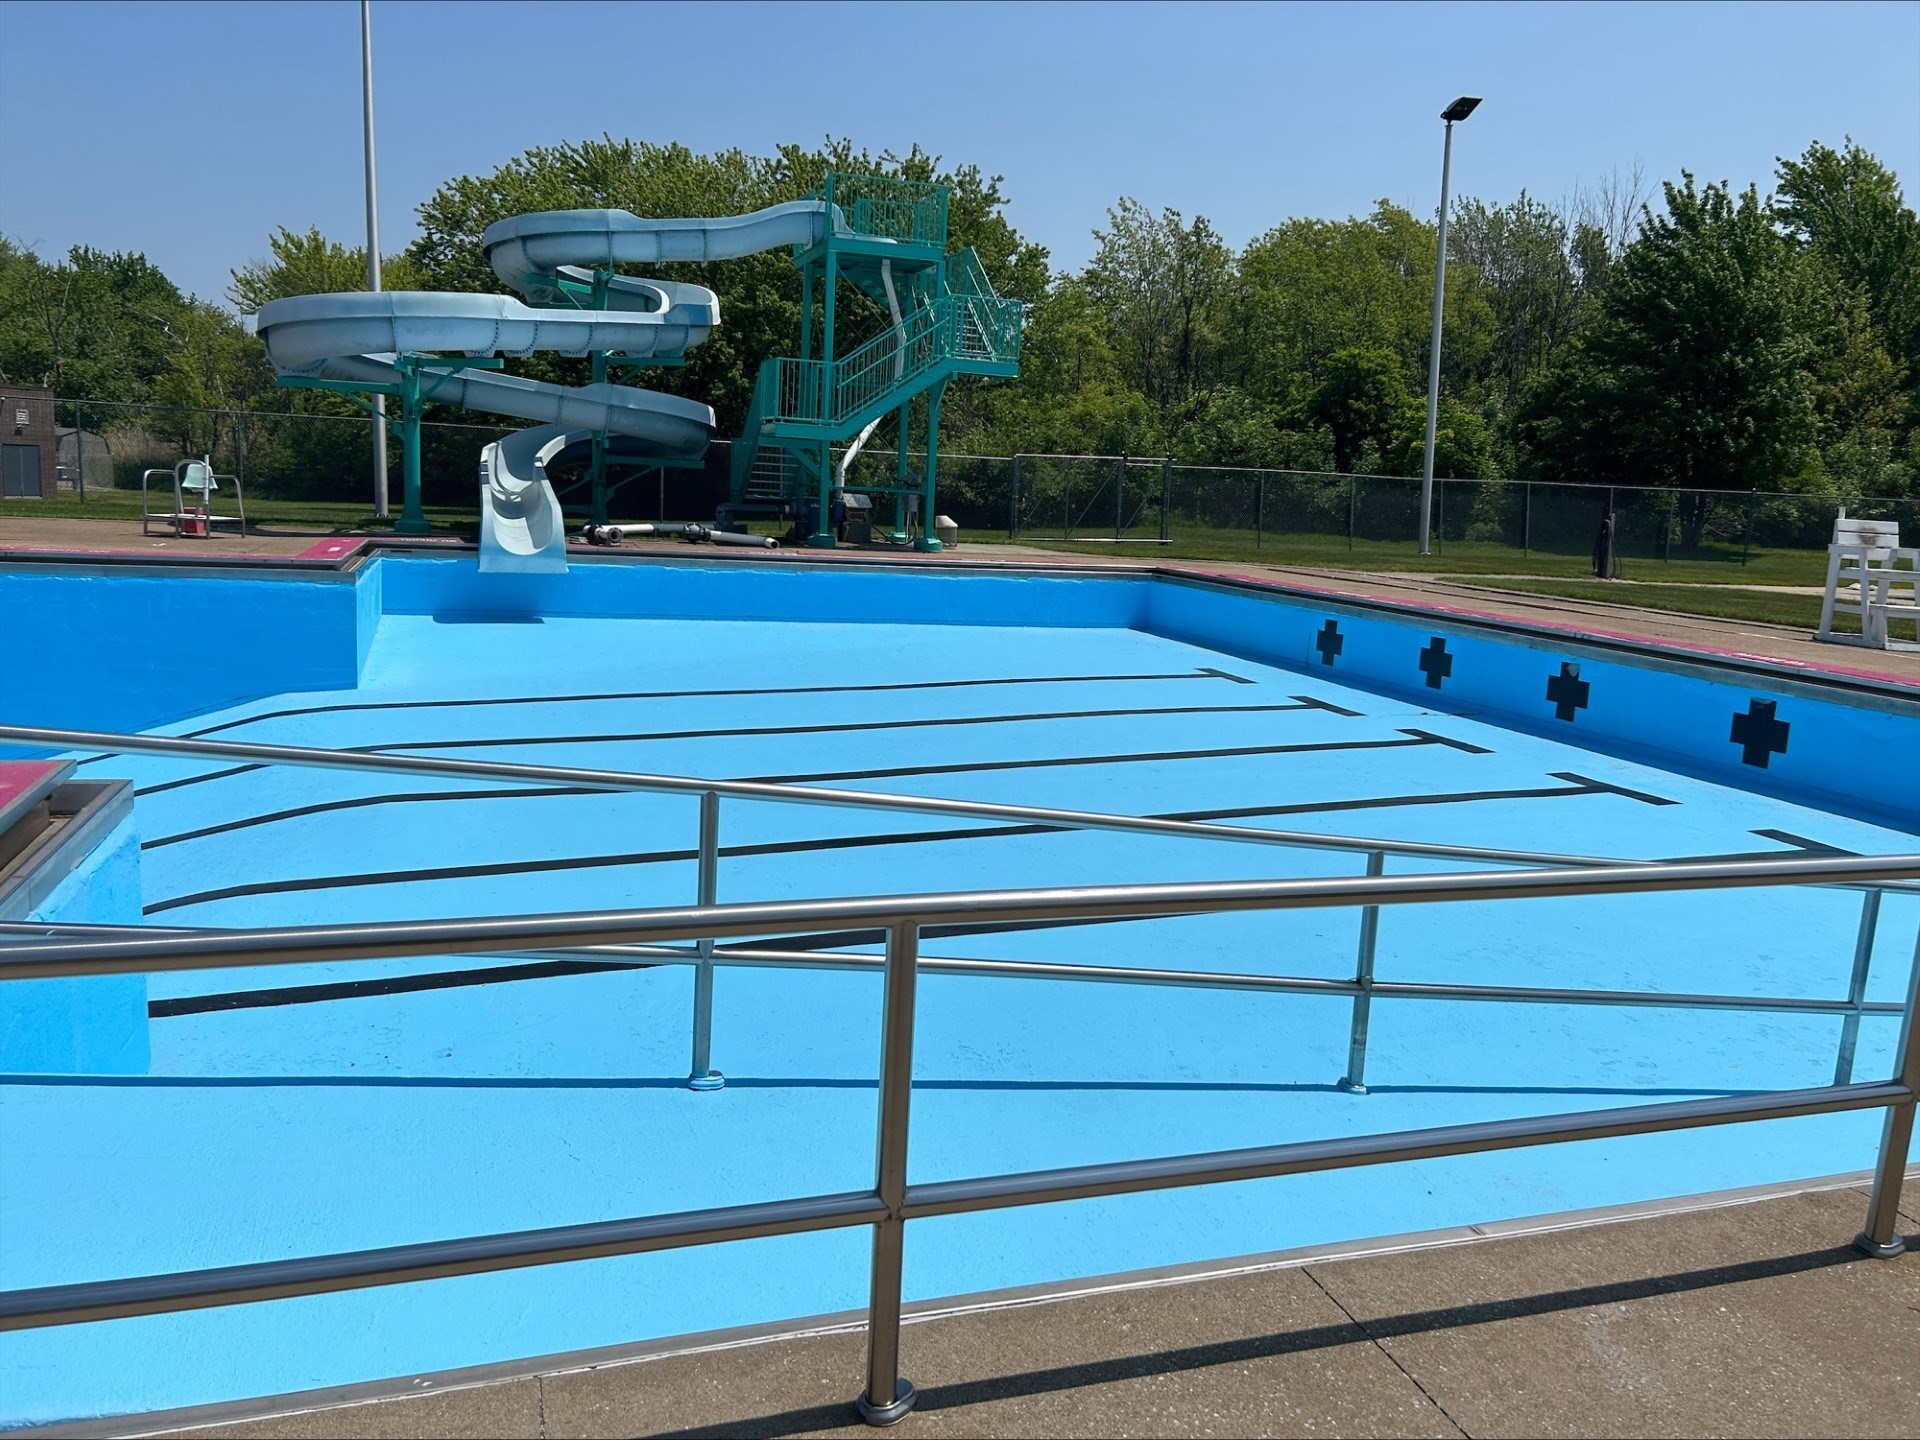 Swimming Season Starting Soon for Community Pools